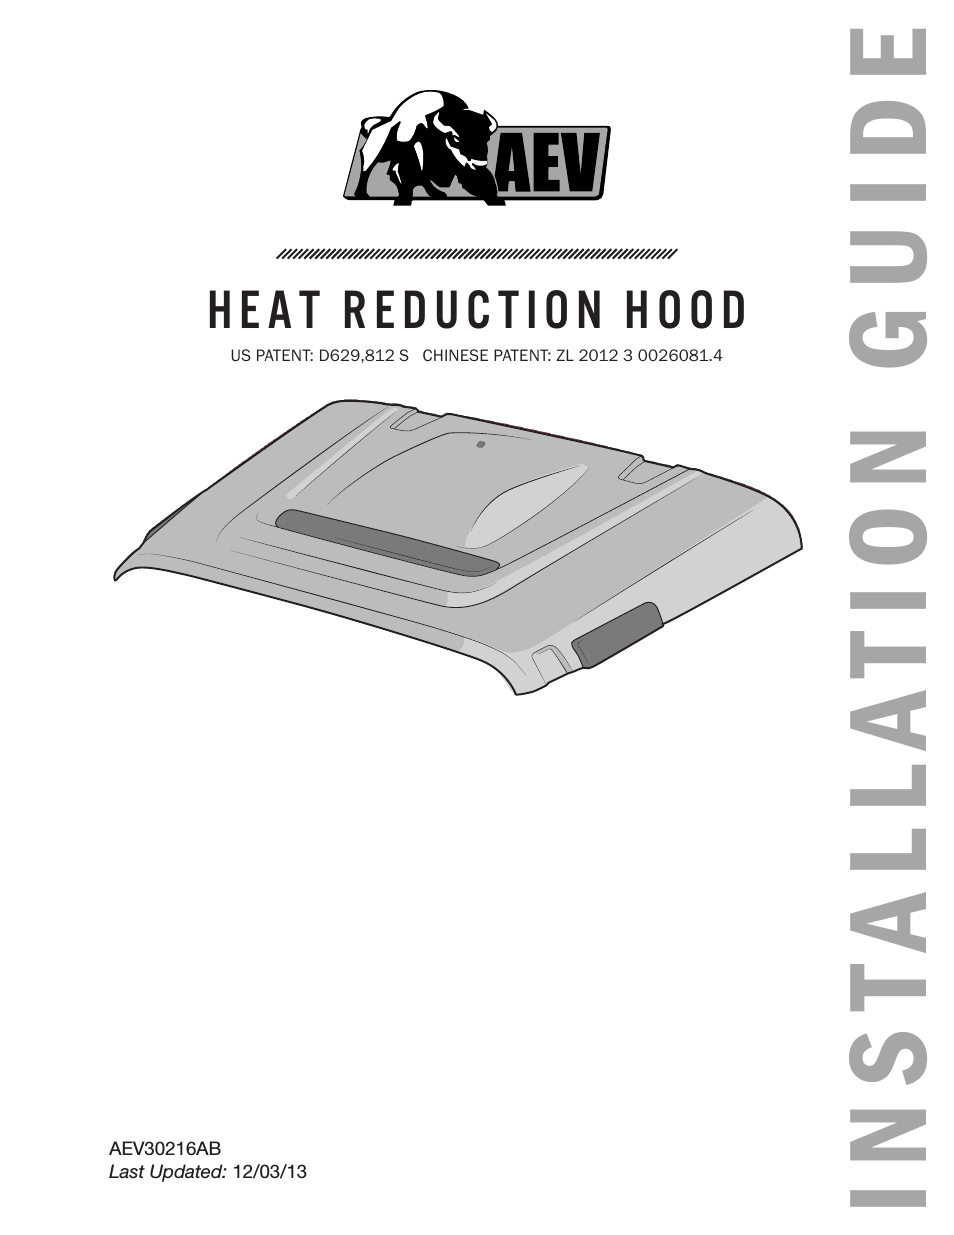 JK Heat Reduction Hood